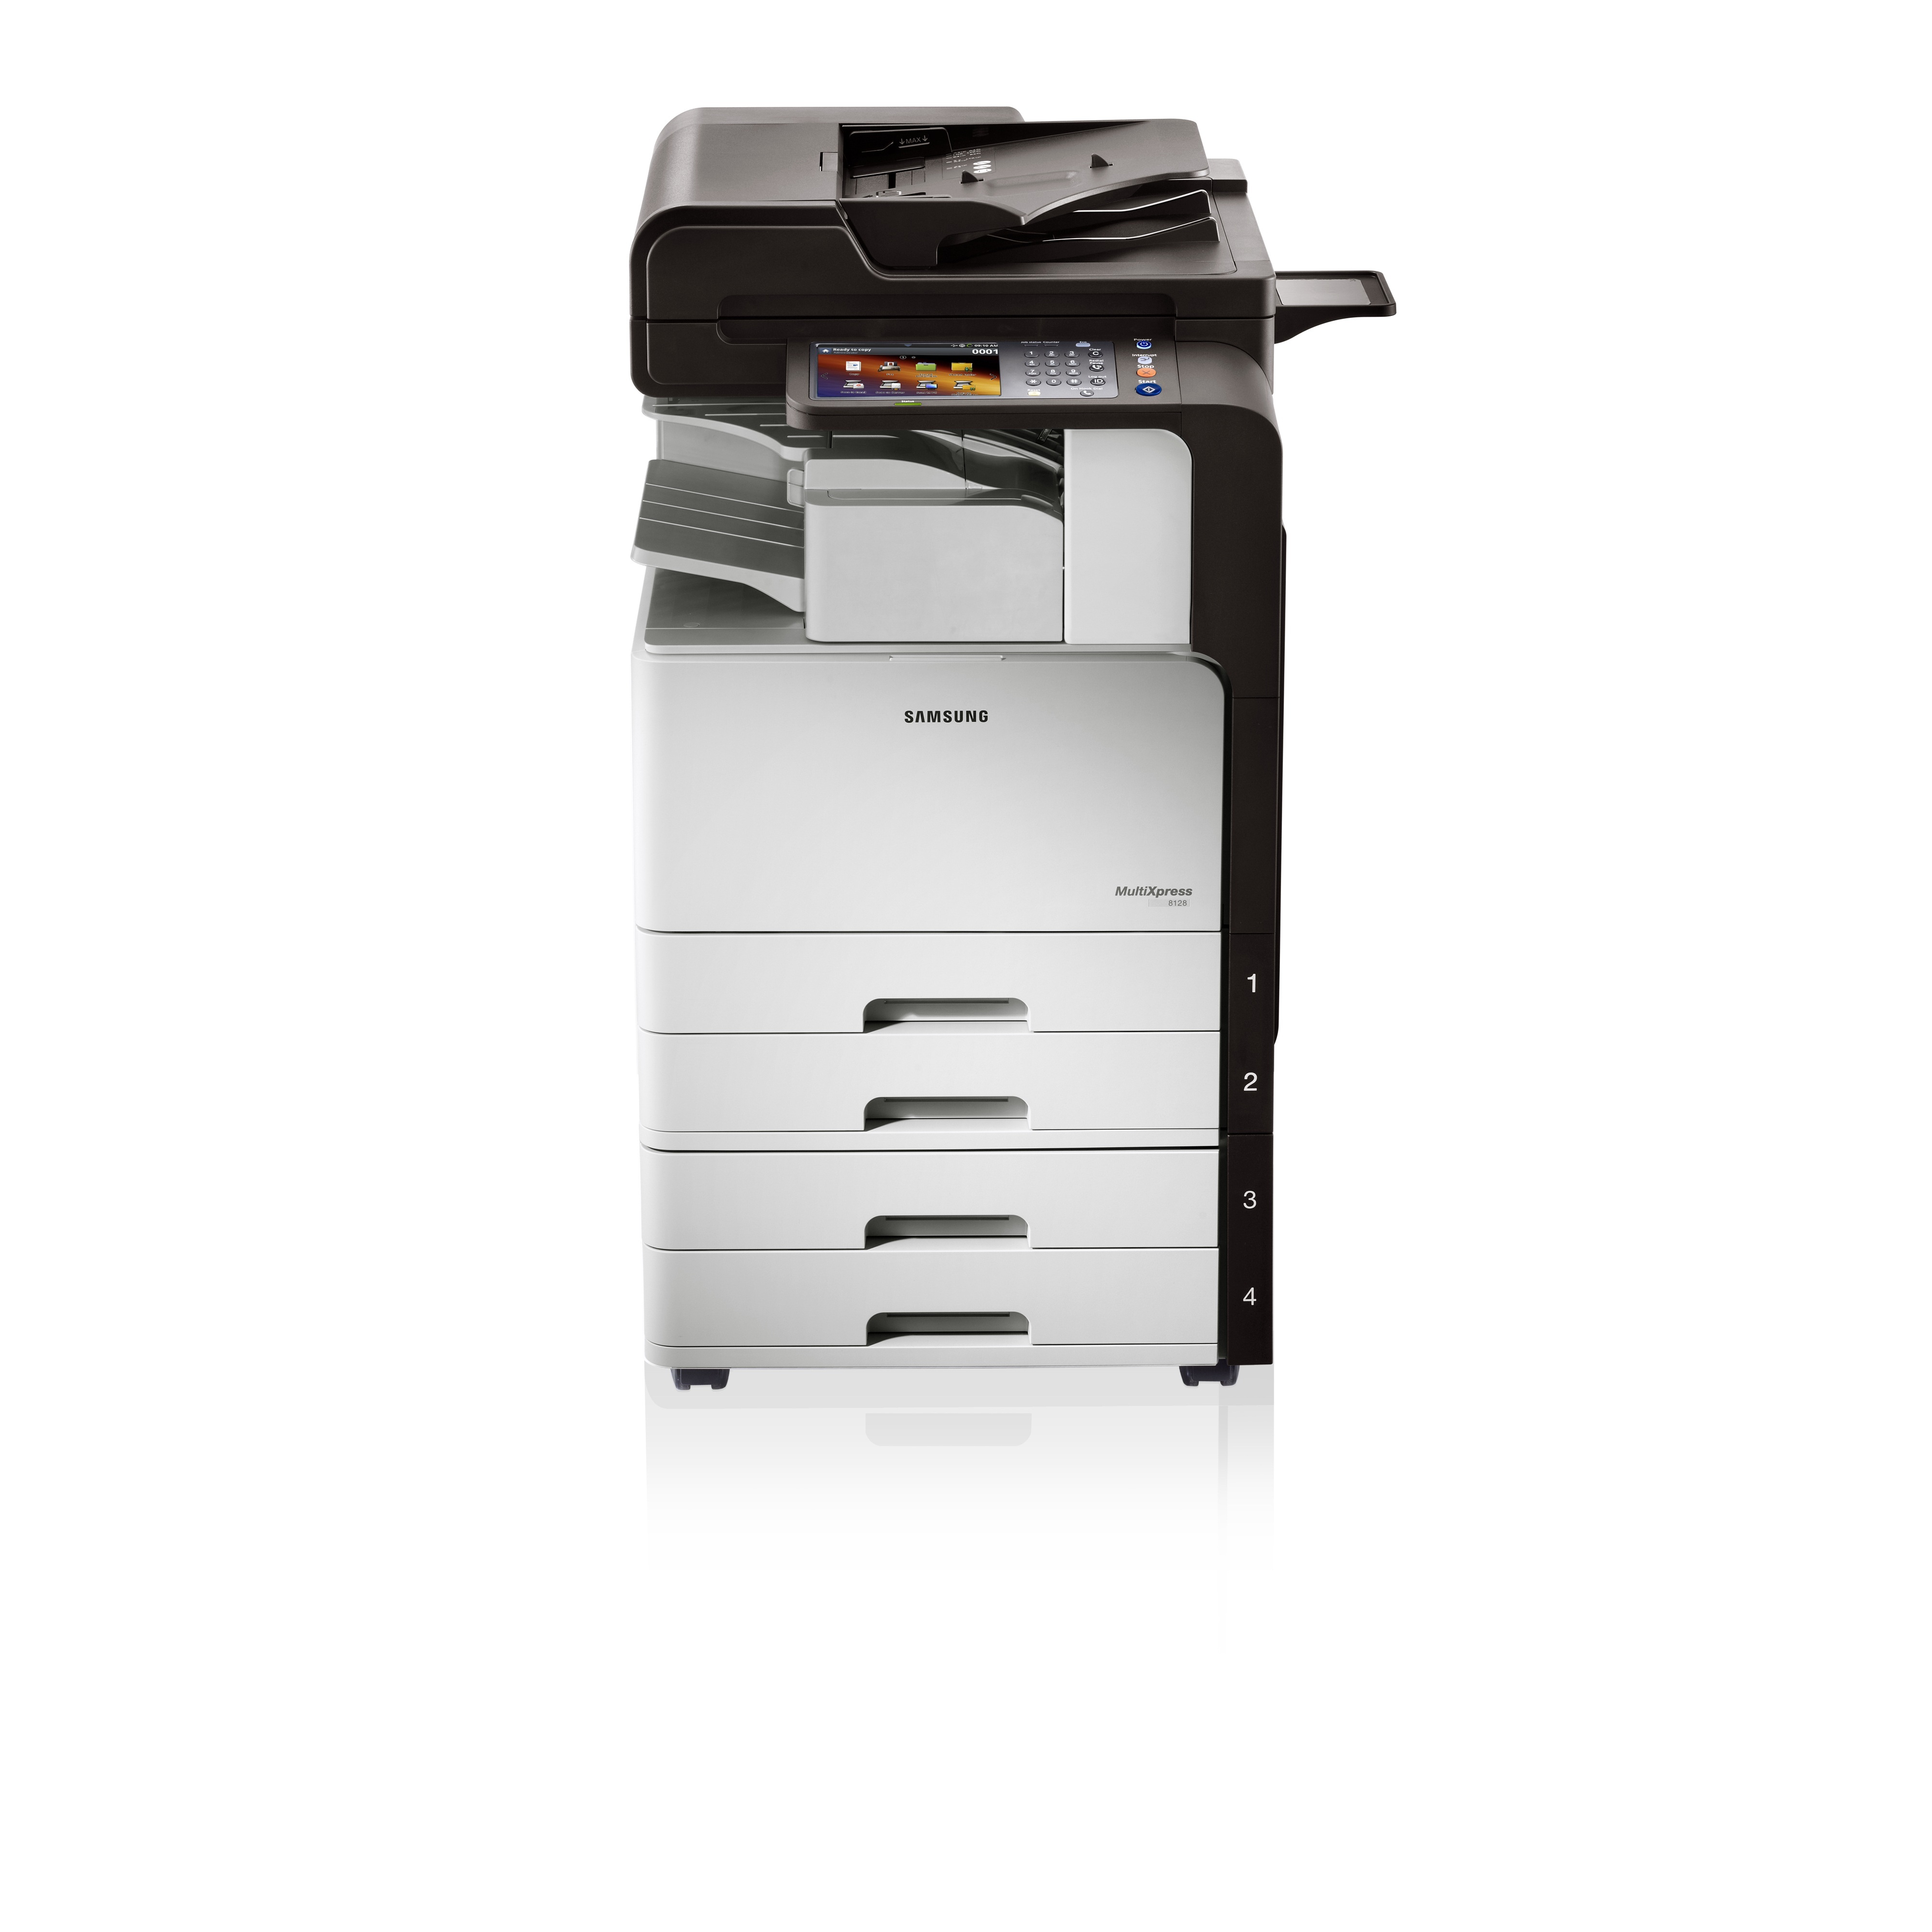 Samsung MultiXpress SCX-8623 Laser Multifunction Printer series